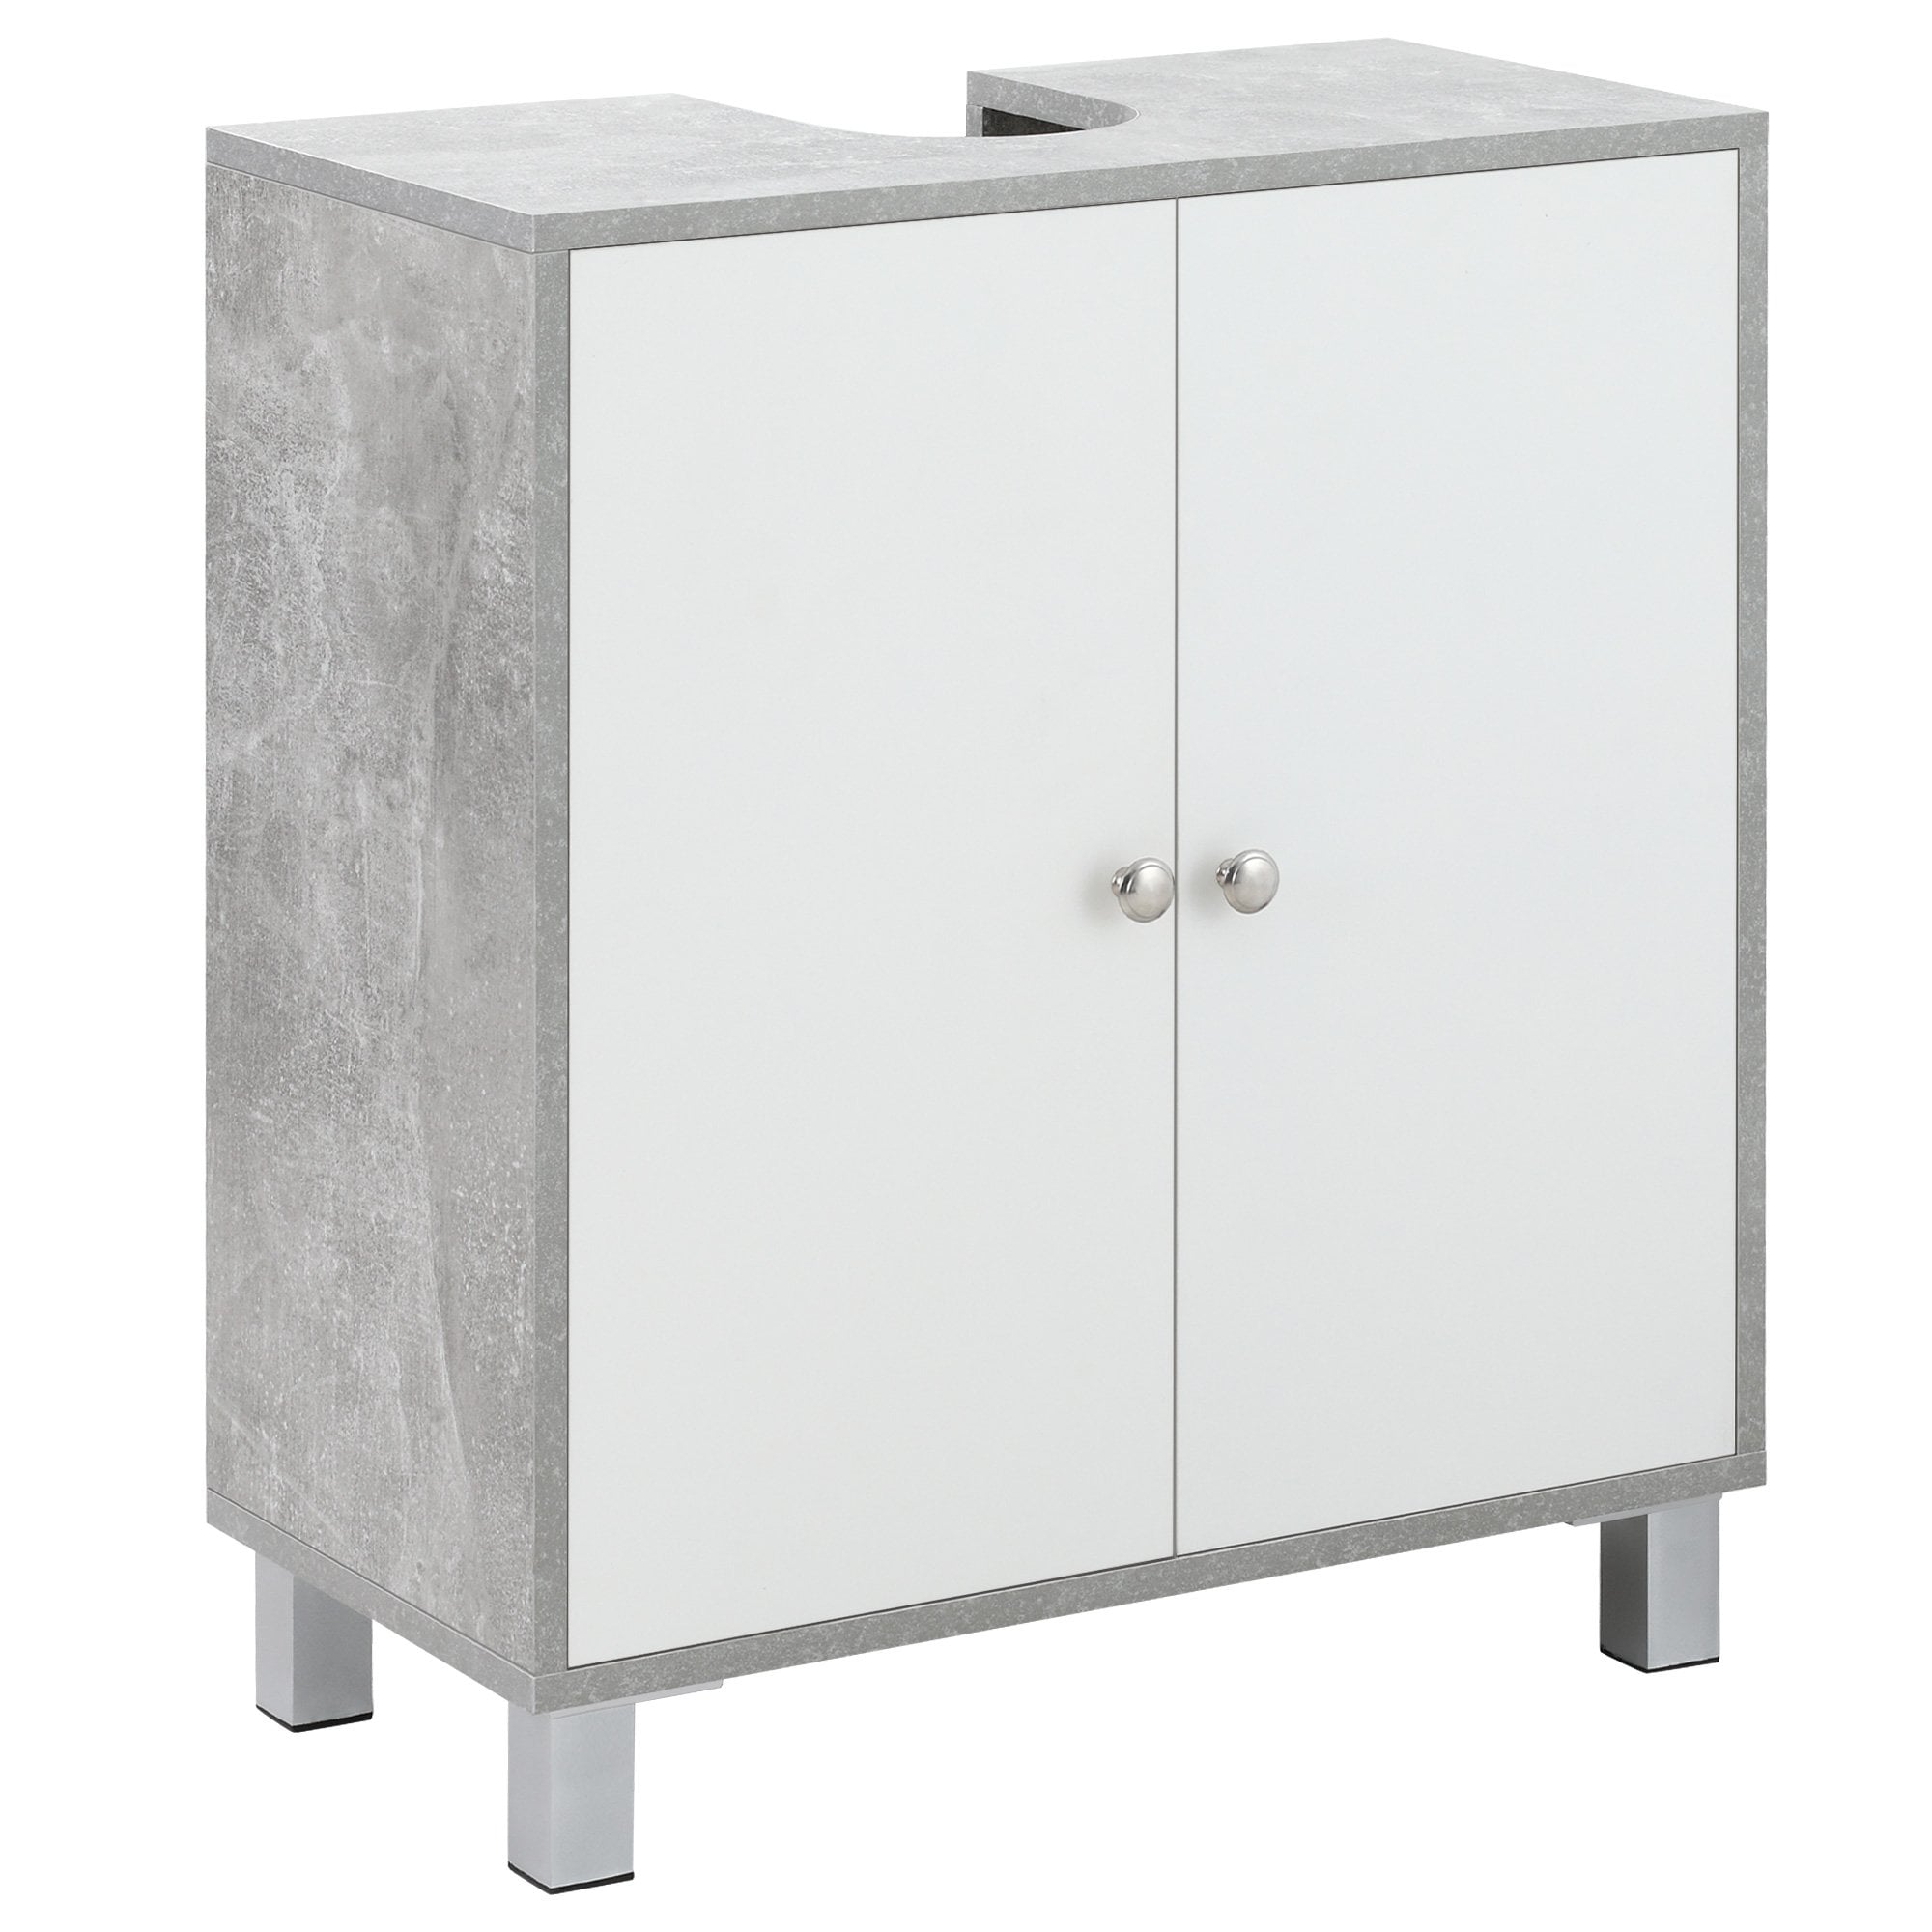 kleankin Under Sink Cabinet - Bathroom Vanity Unit - Pedestal Under Sink Design - Storage Cupboard with Adjustable Shelves - White and Grey Double Doo